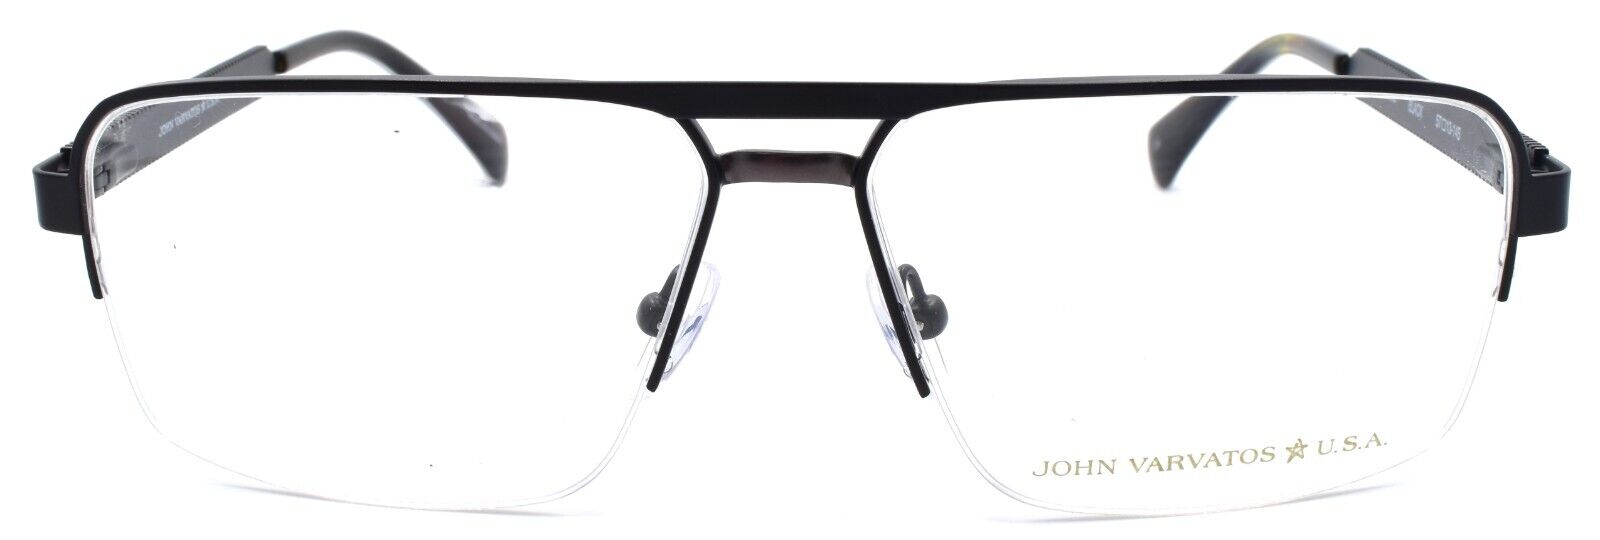 2-John Varvatos VJVC005 Men's Eyeglasses Frames Half-rim 57-13-145 Black-751286356144-IKSpecs